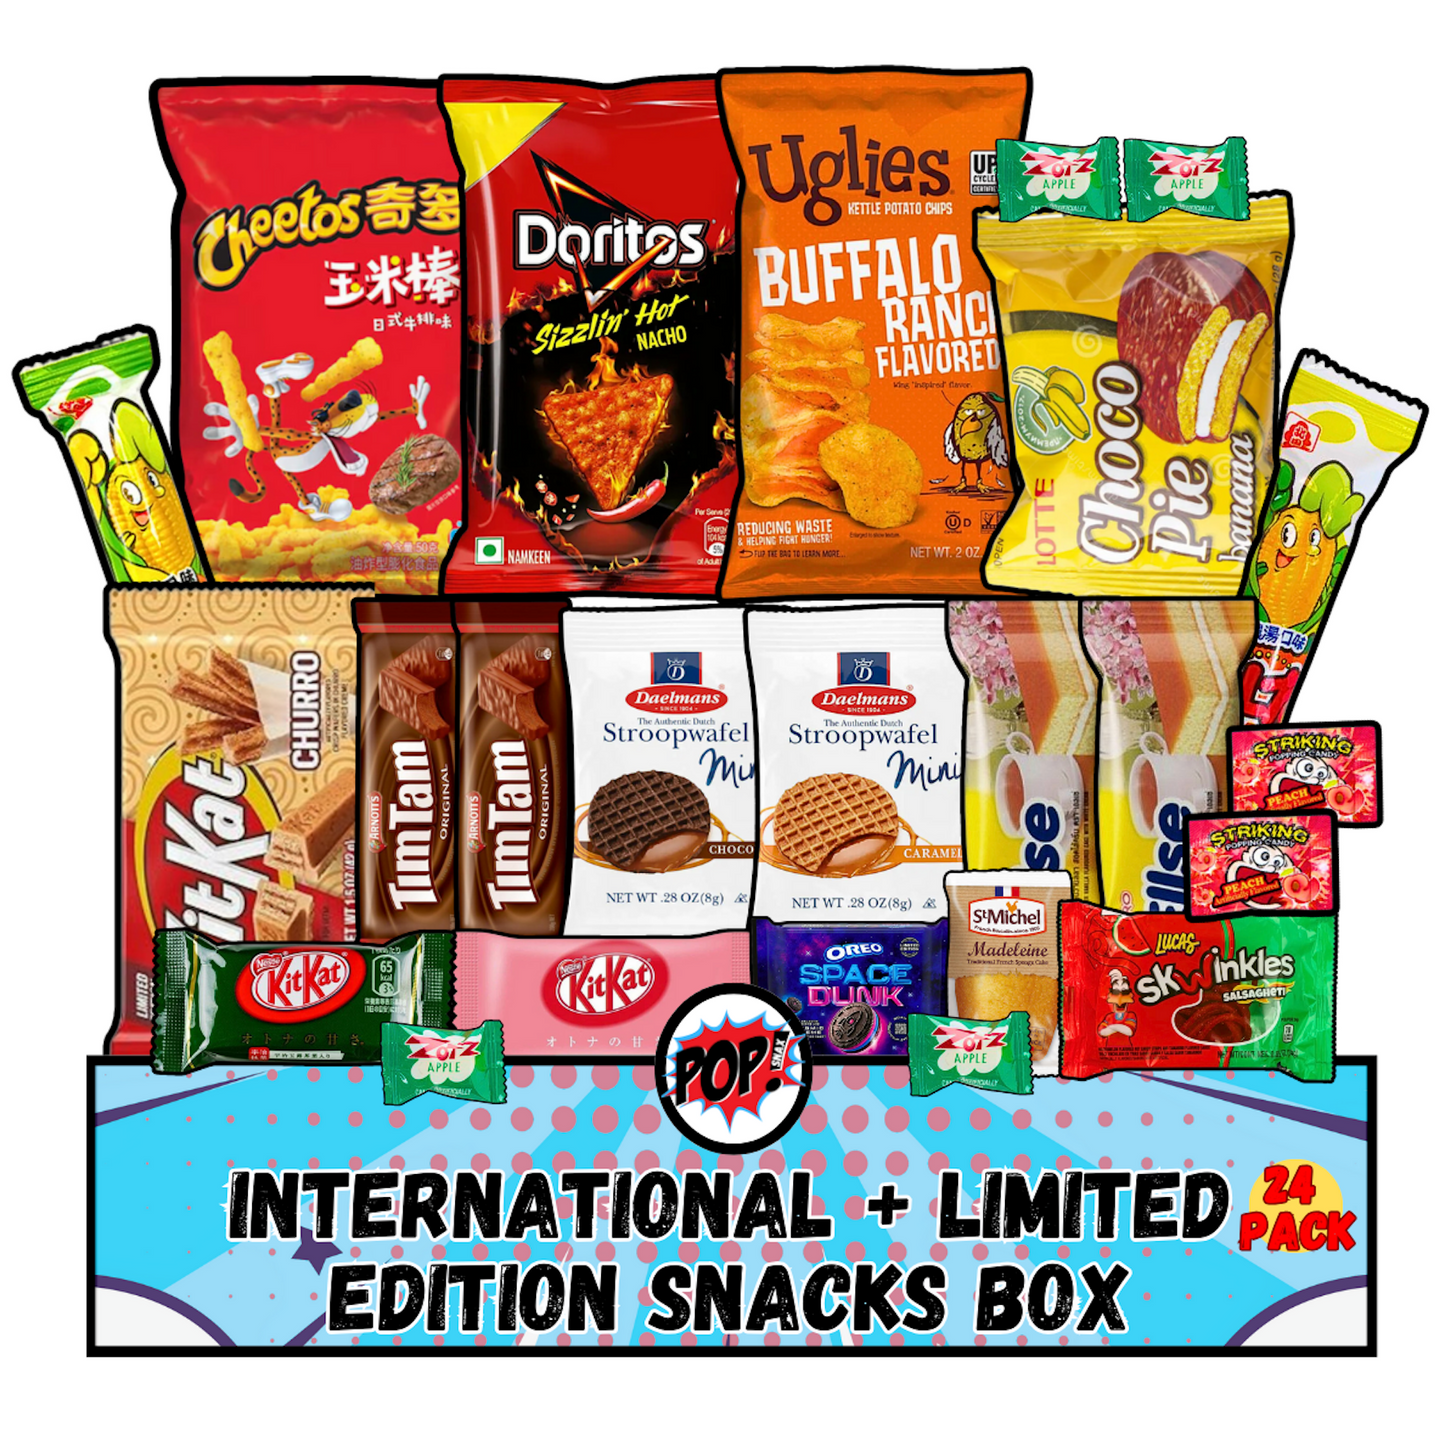 International + Limited Edition Snacks Box - 24 Pack